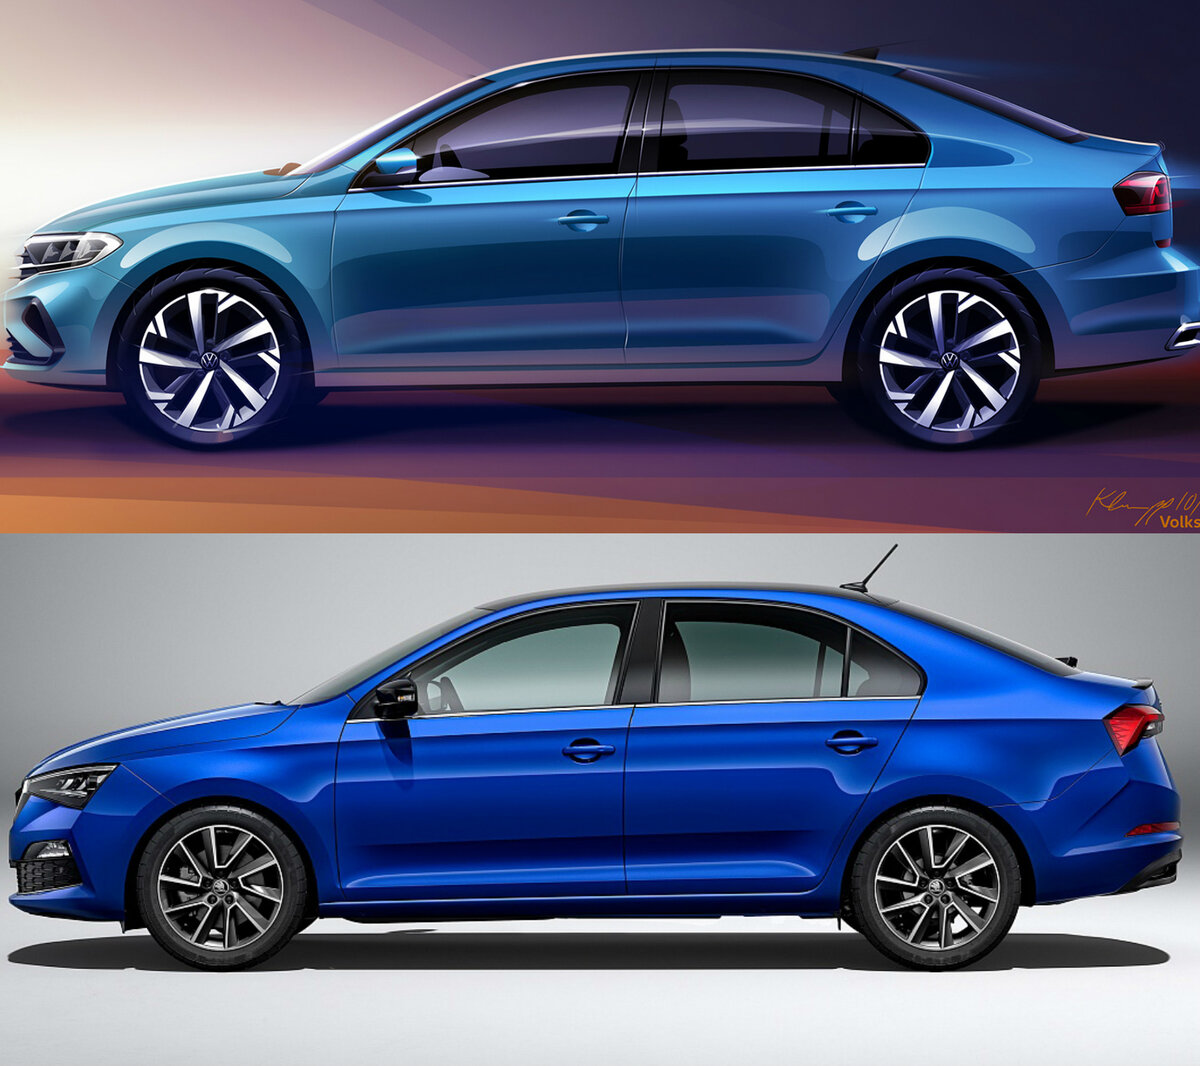 Фольксваген поло 2017 года выпуска. Volkswagen New Polo. Новый Volkswagen Polo 2020. Volkswagen Polo sedan 2020. Новый Volkswagen Polo sedan 2020.